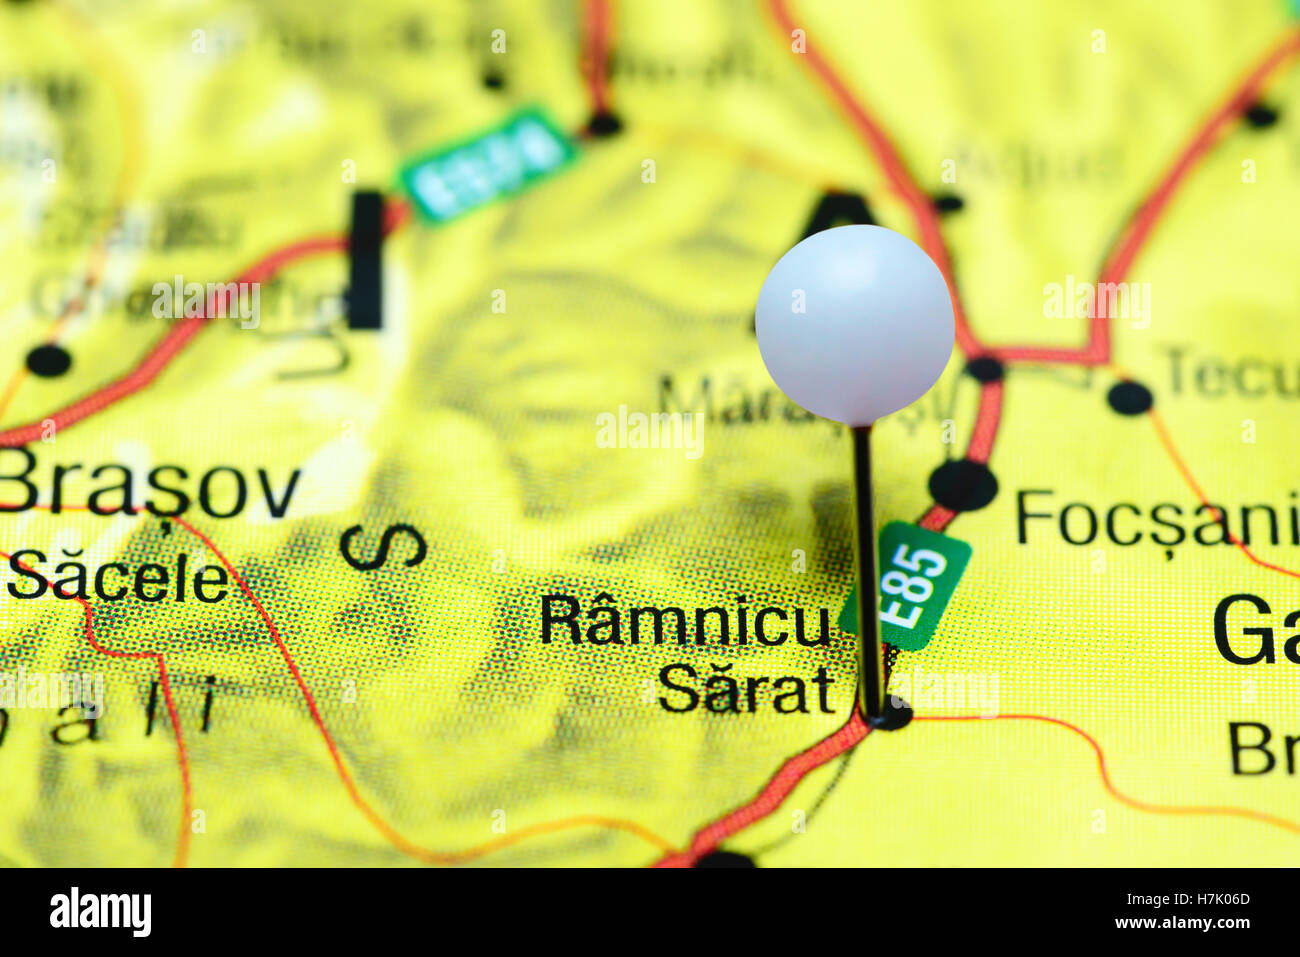 Ramnicu Sarat pinned on a map of Romania Stock Photo - Alamy